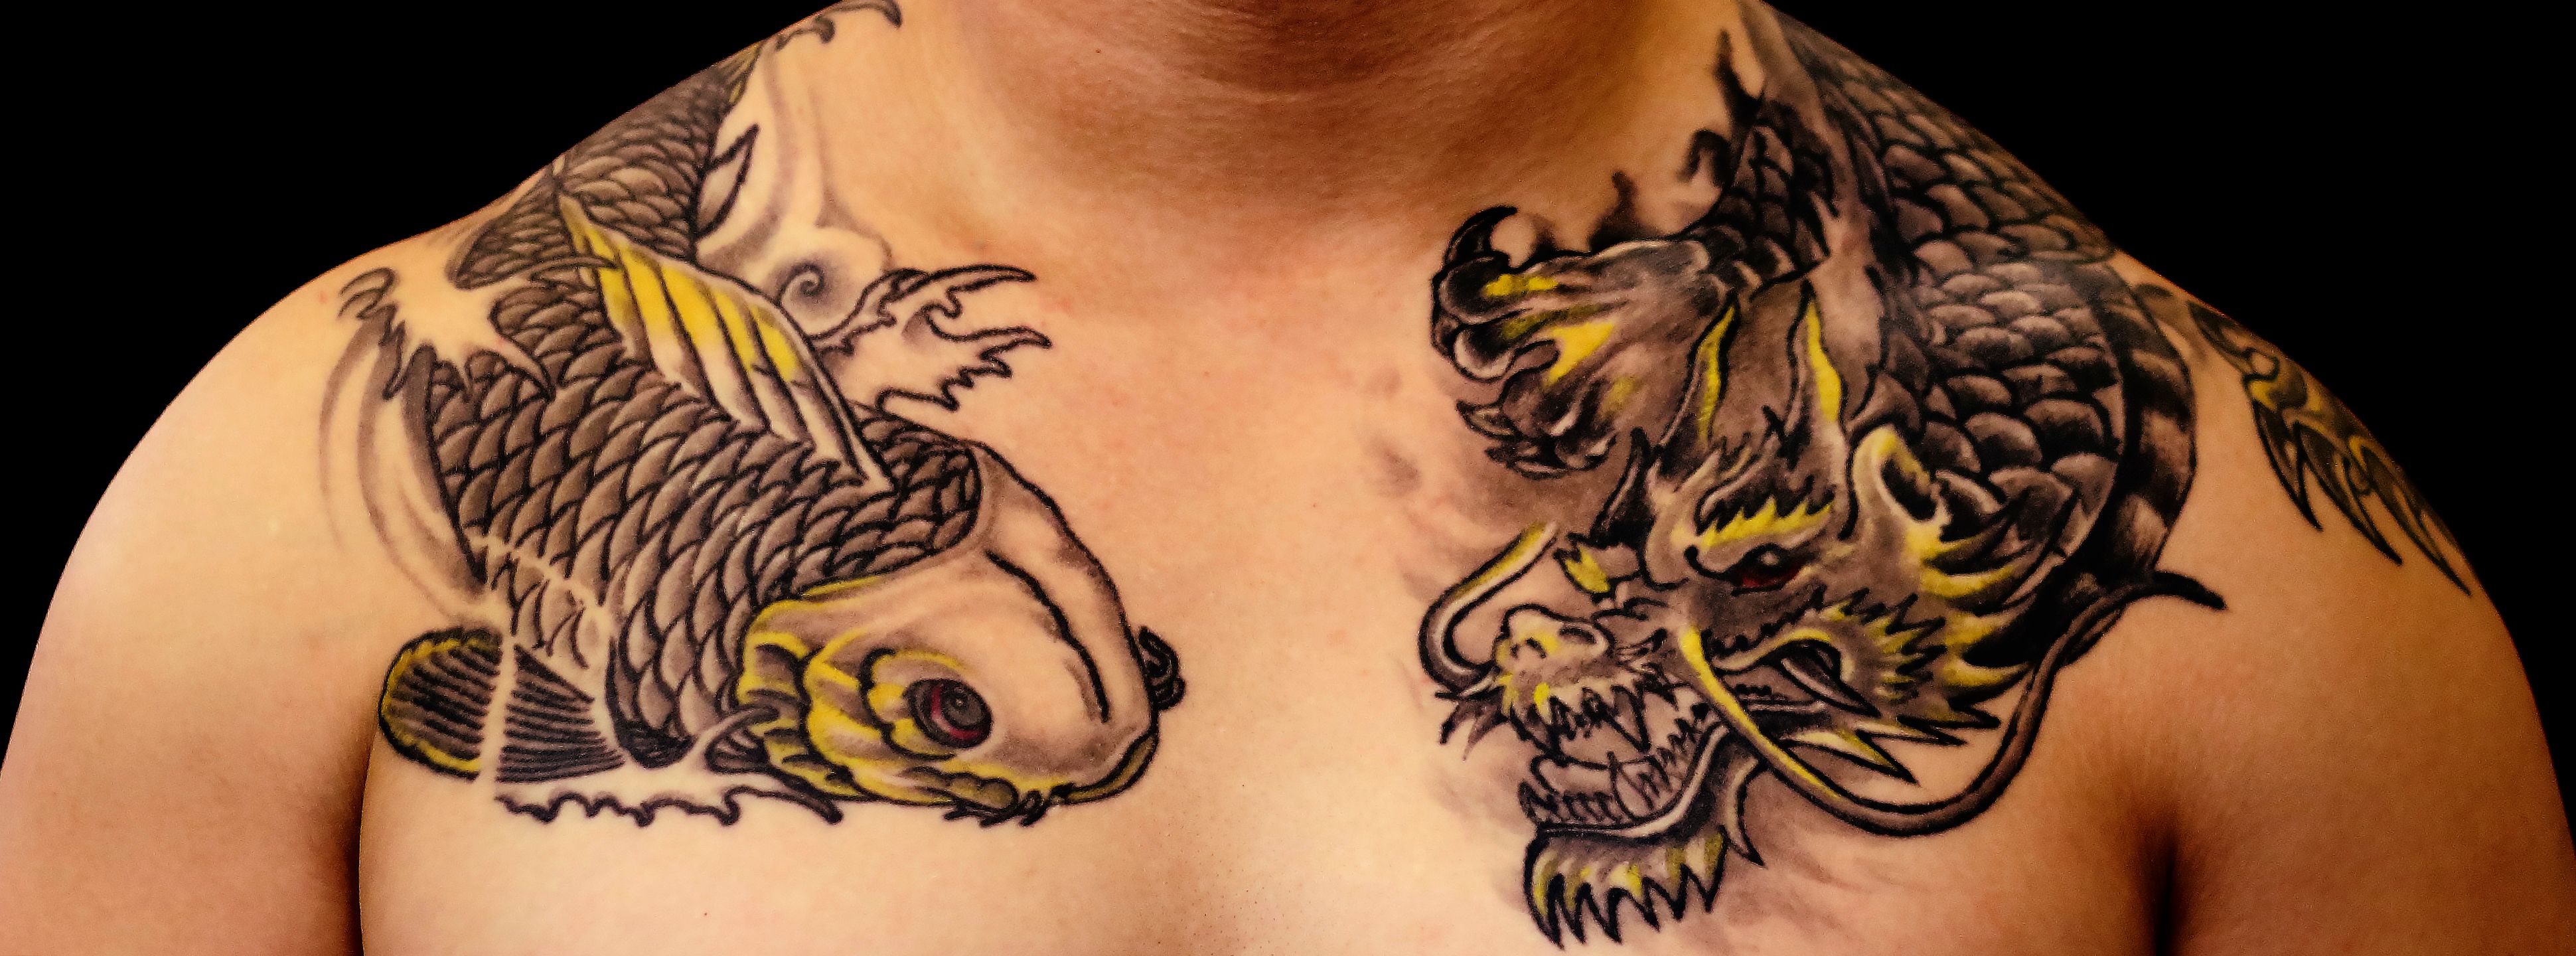 Chest tattoos | GET a custom Tattoo design 100% ONLINE